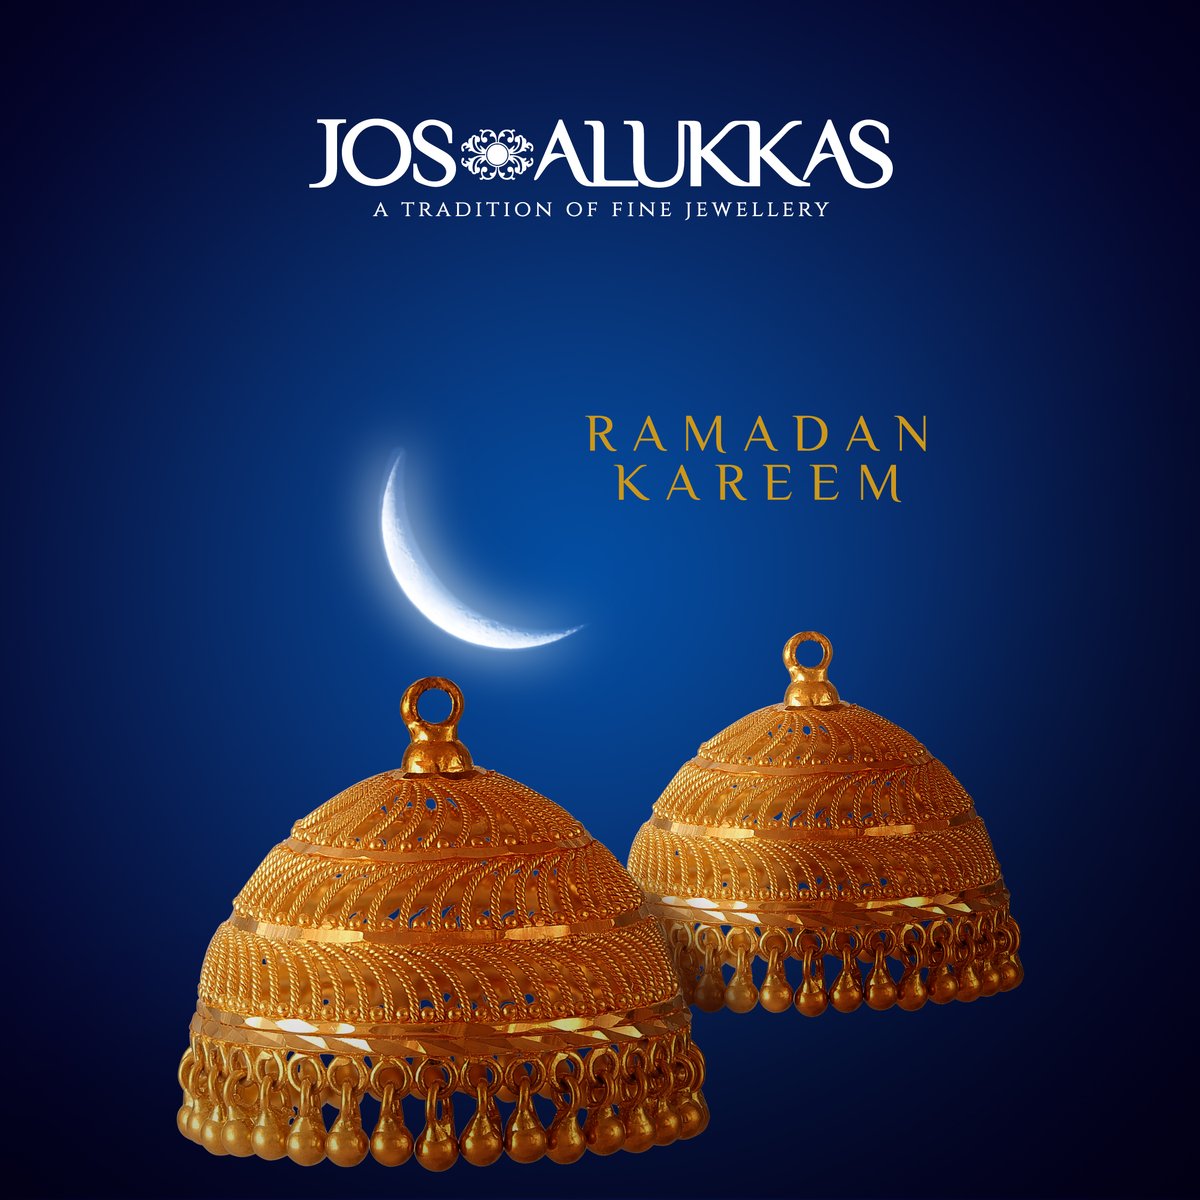 As the holy month of Ramzan begins, Jos Alukkas wishes everyone observing abstinence peace and prosperity. #JosAlukkas #RamadanKareem #Ramadan #JosAlukkasOnline #Jewellery